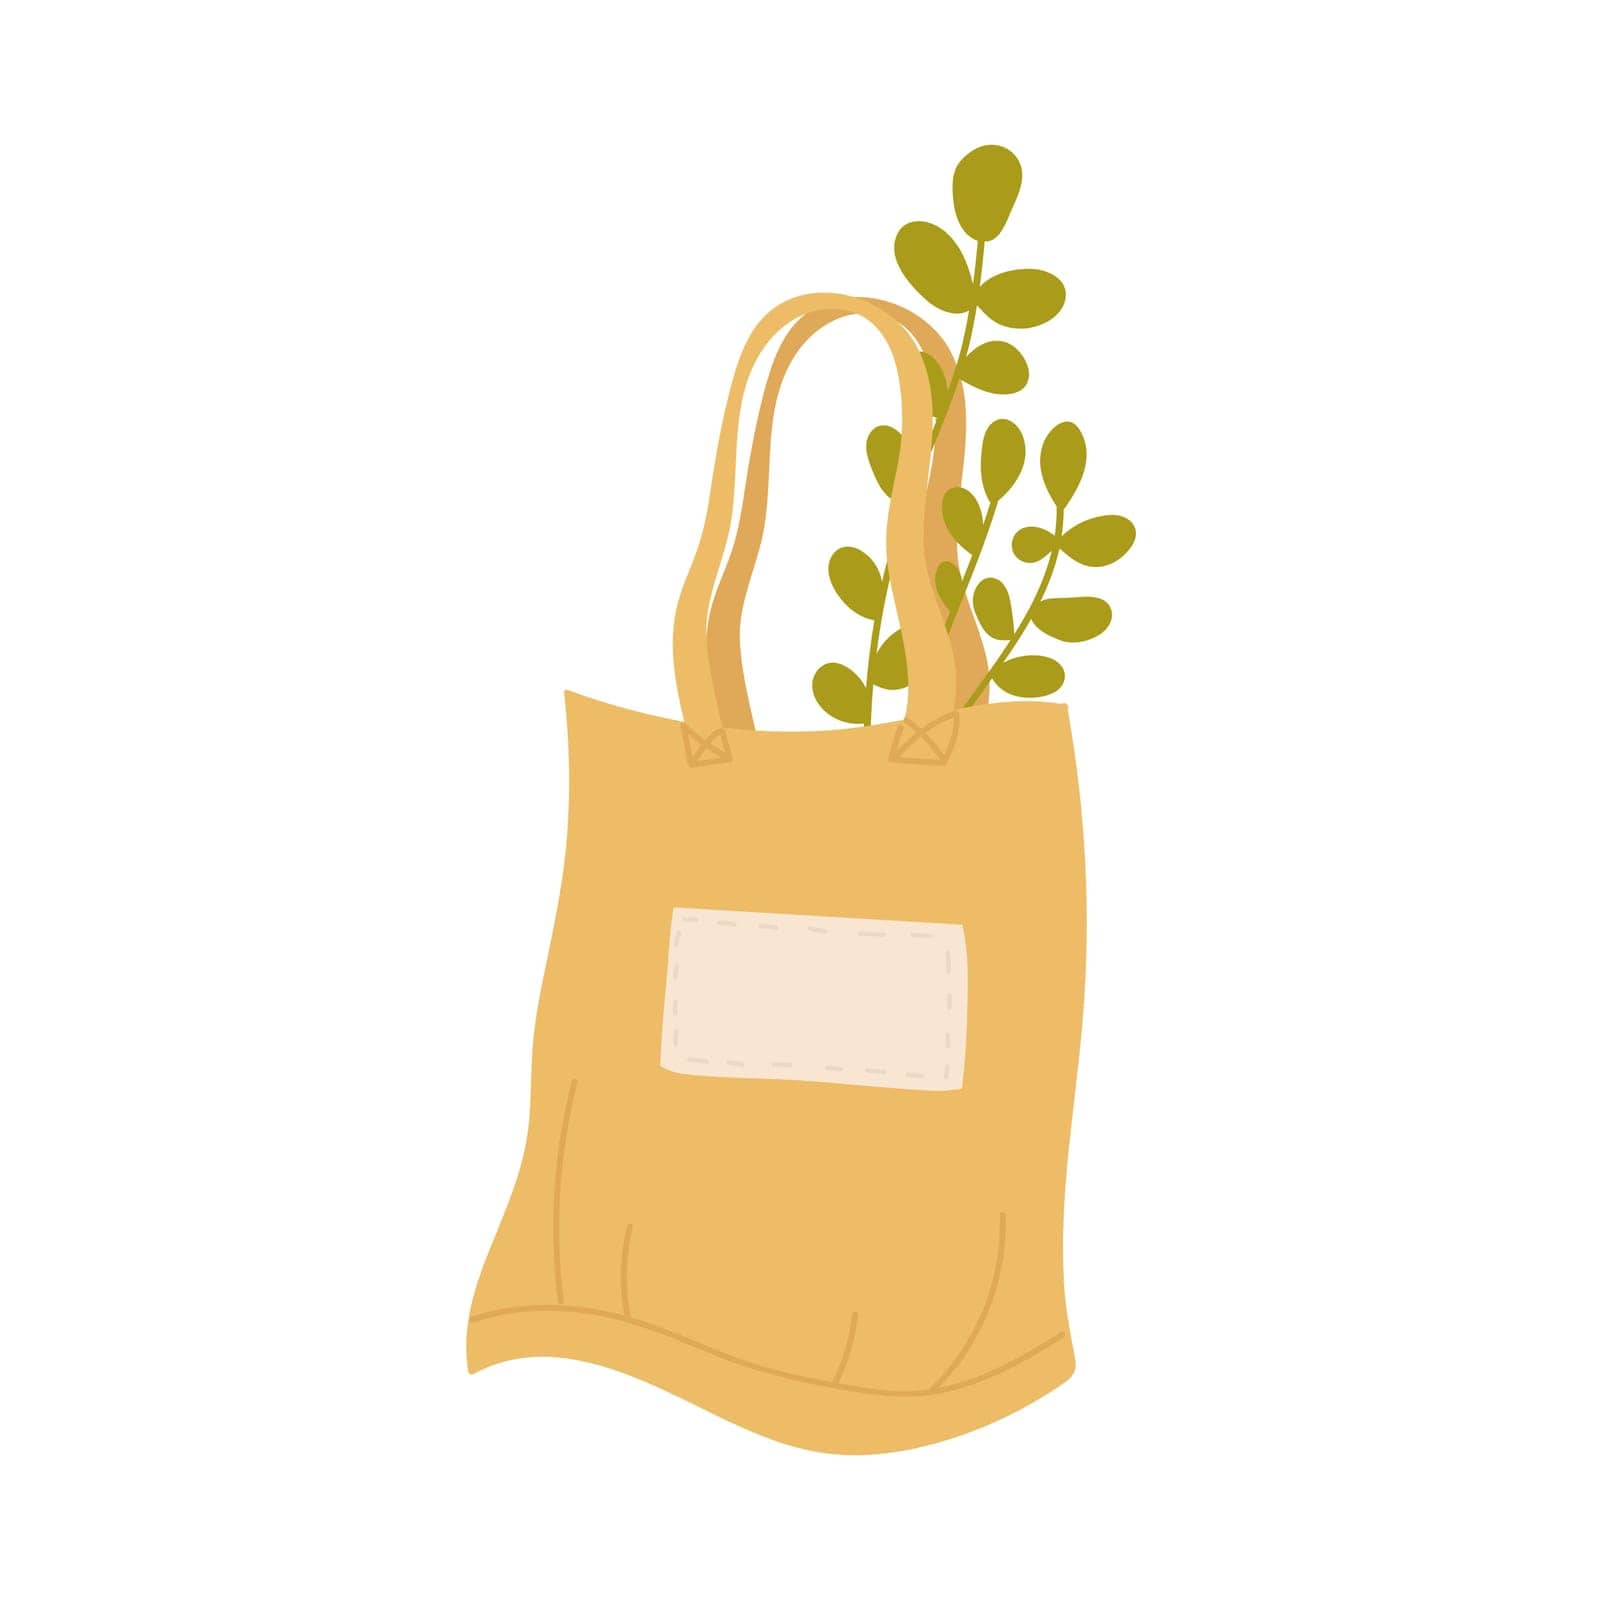 Reusable organic bag. Cotton natural products, zero waste shopping vector illustration